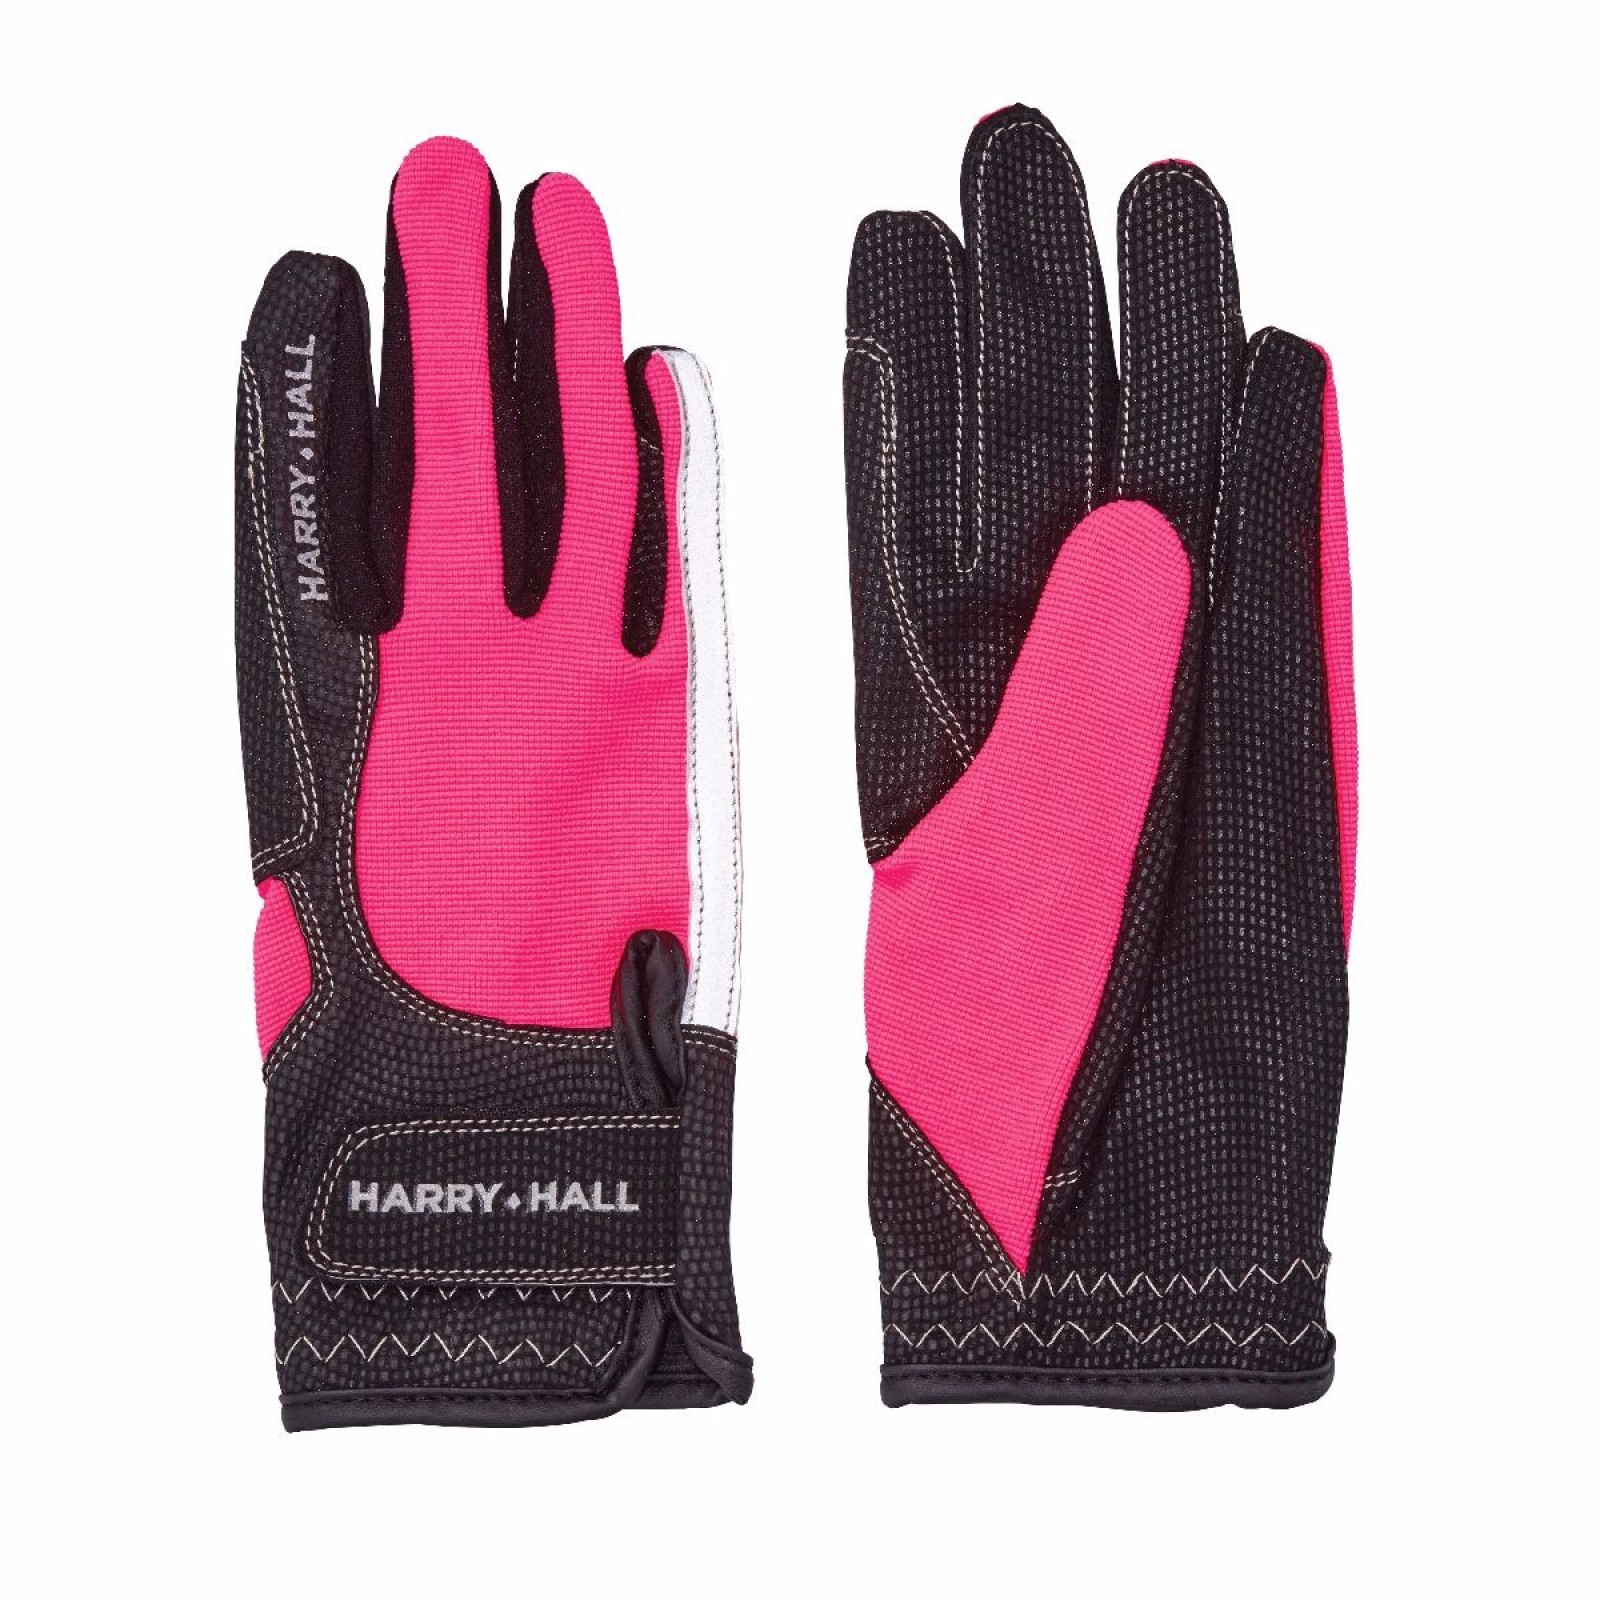 Harry Hall Lockton Special Reflective Riding Gloves Pink